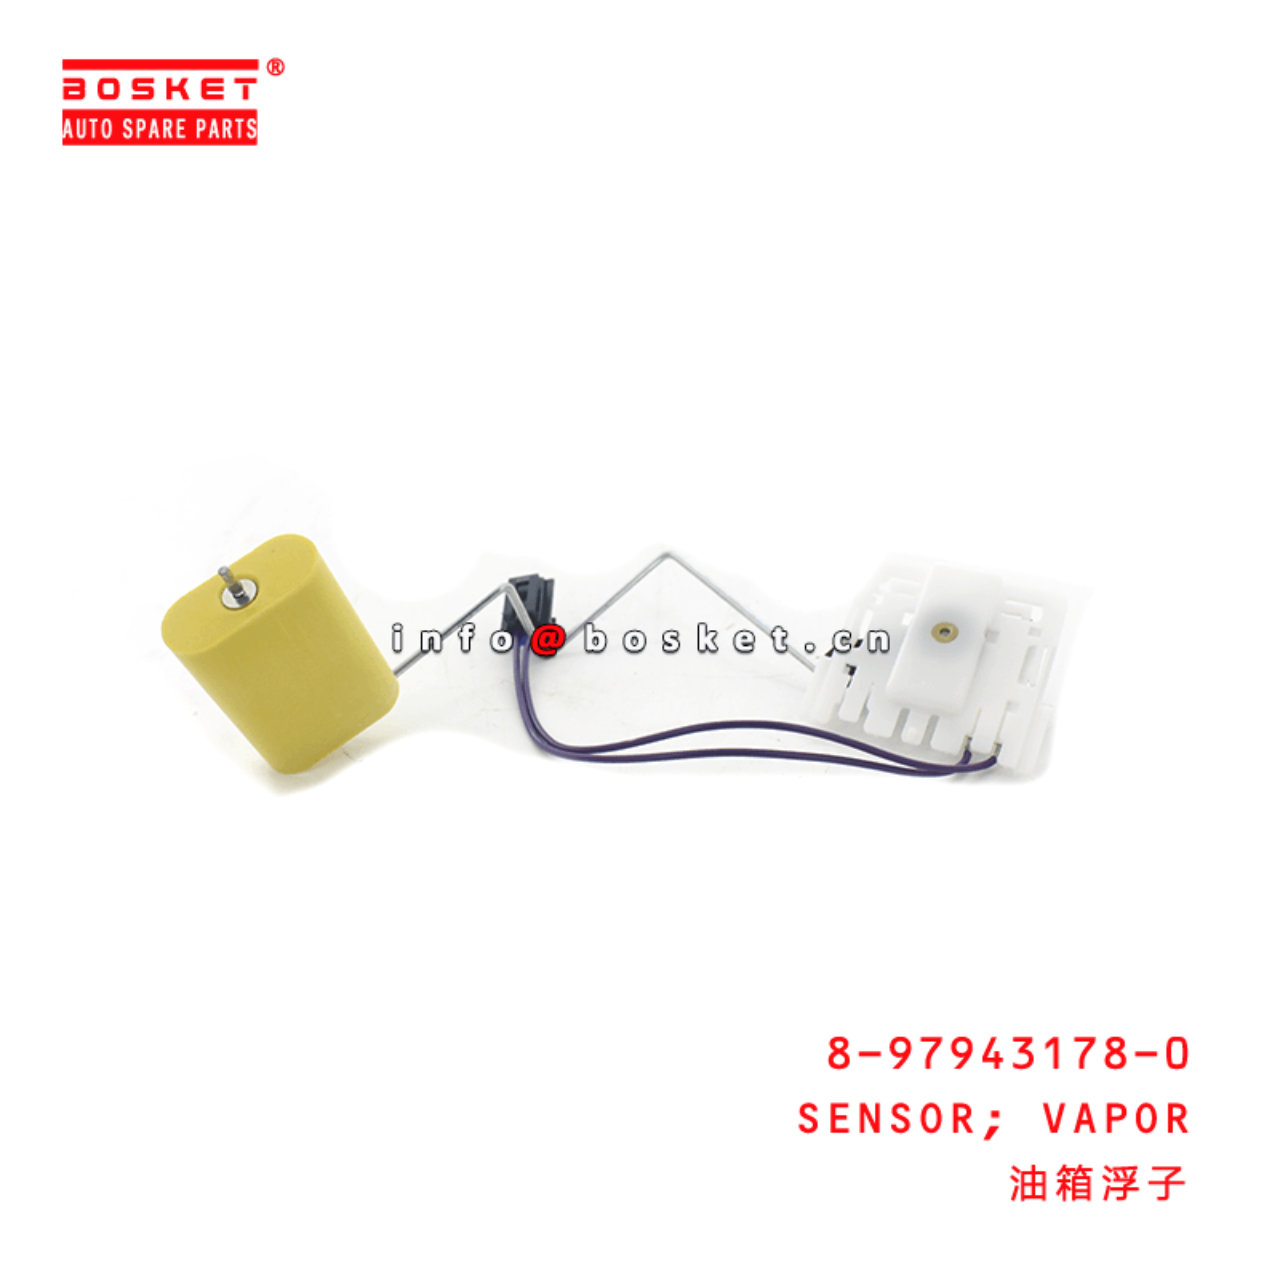 8-97943178-0 Vapor Sensor 8979431780 Suitable for ISUZU DMAX